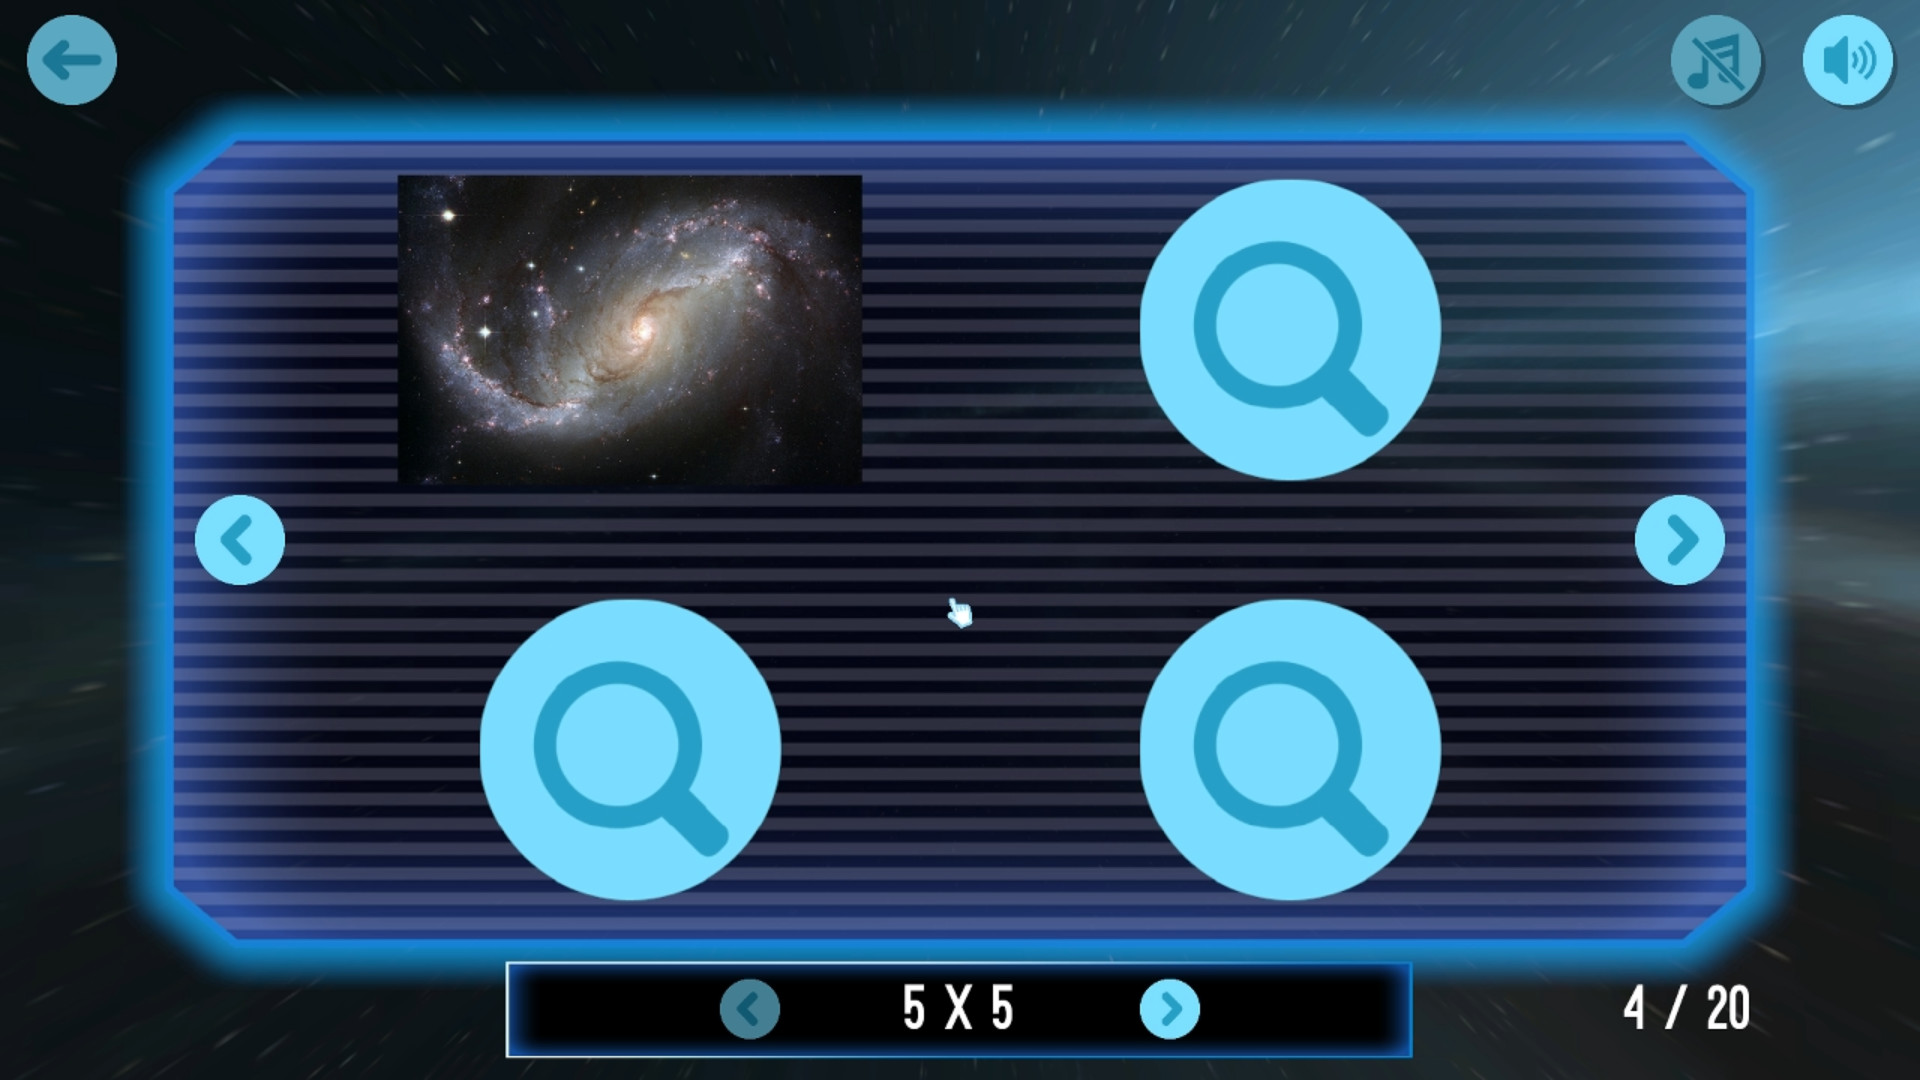 Puzzle 101: Edge of Galaxy 宇宙边际 screenshot